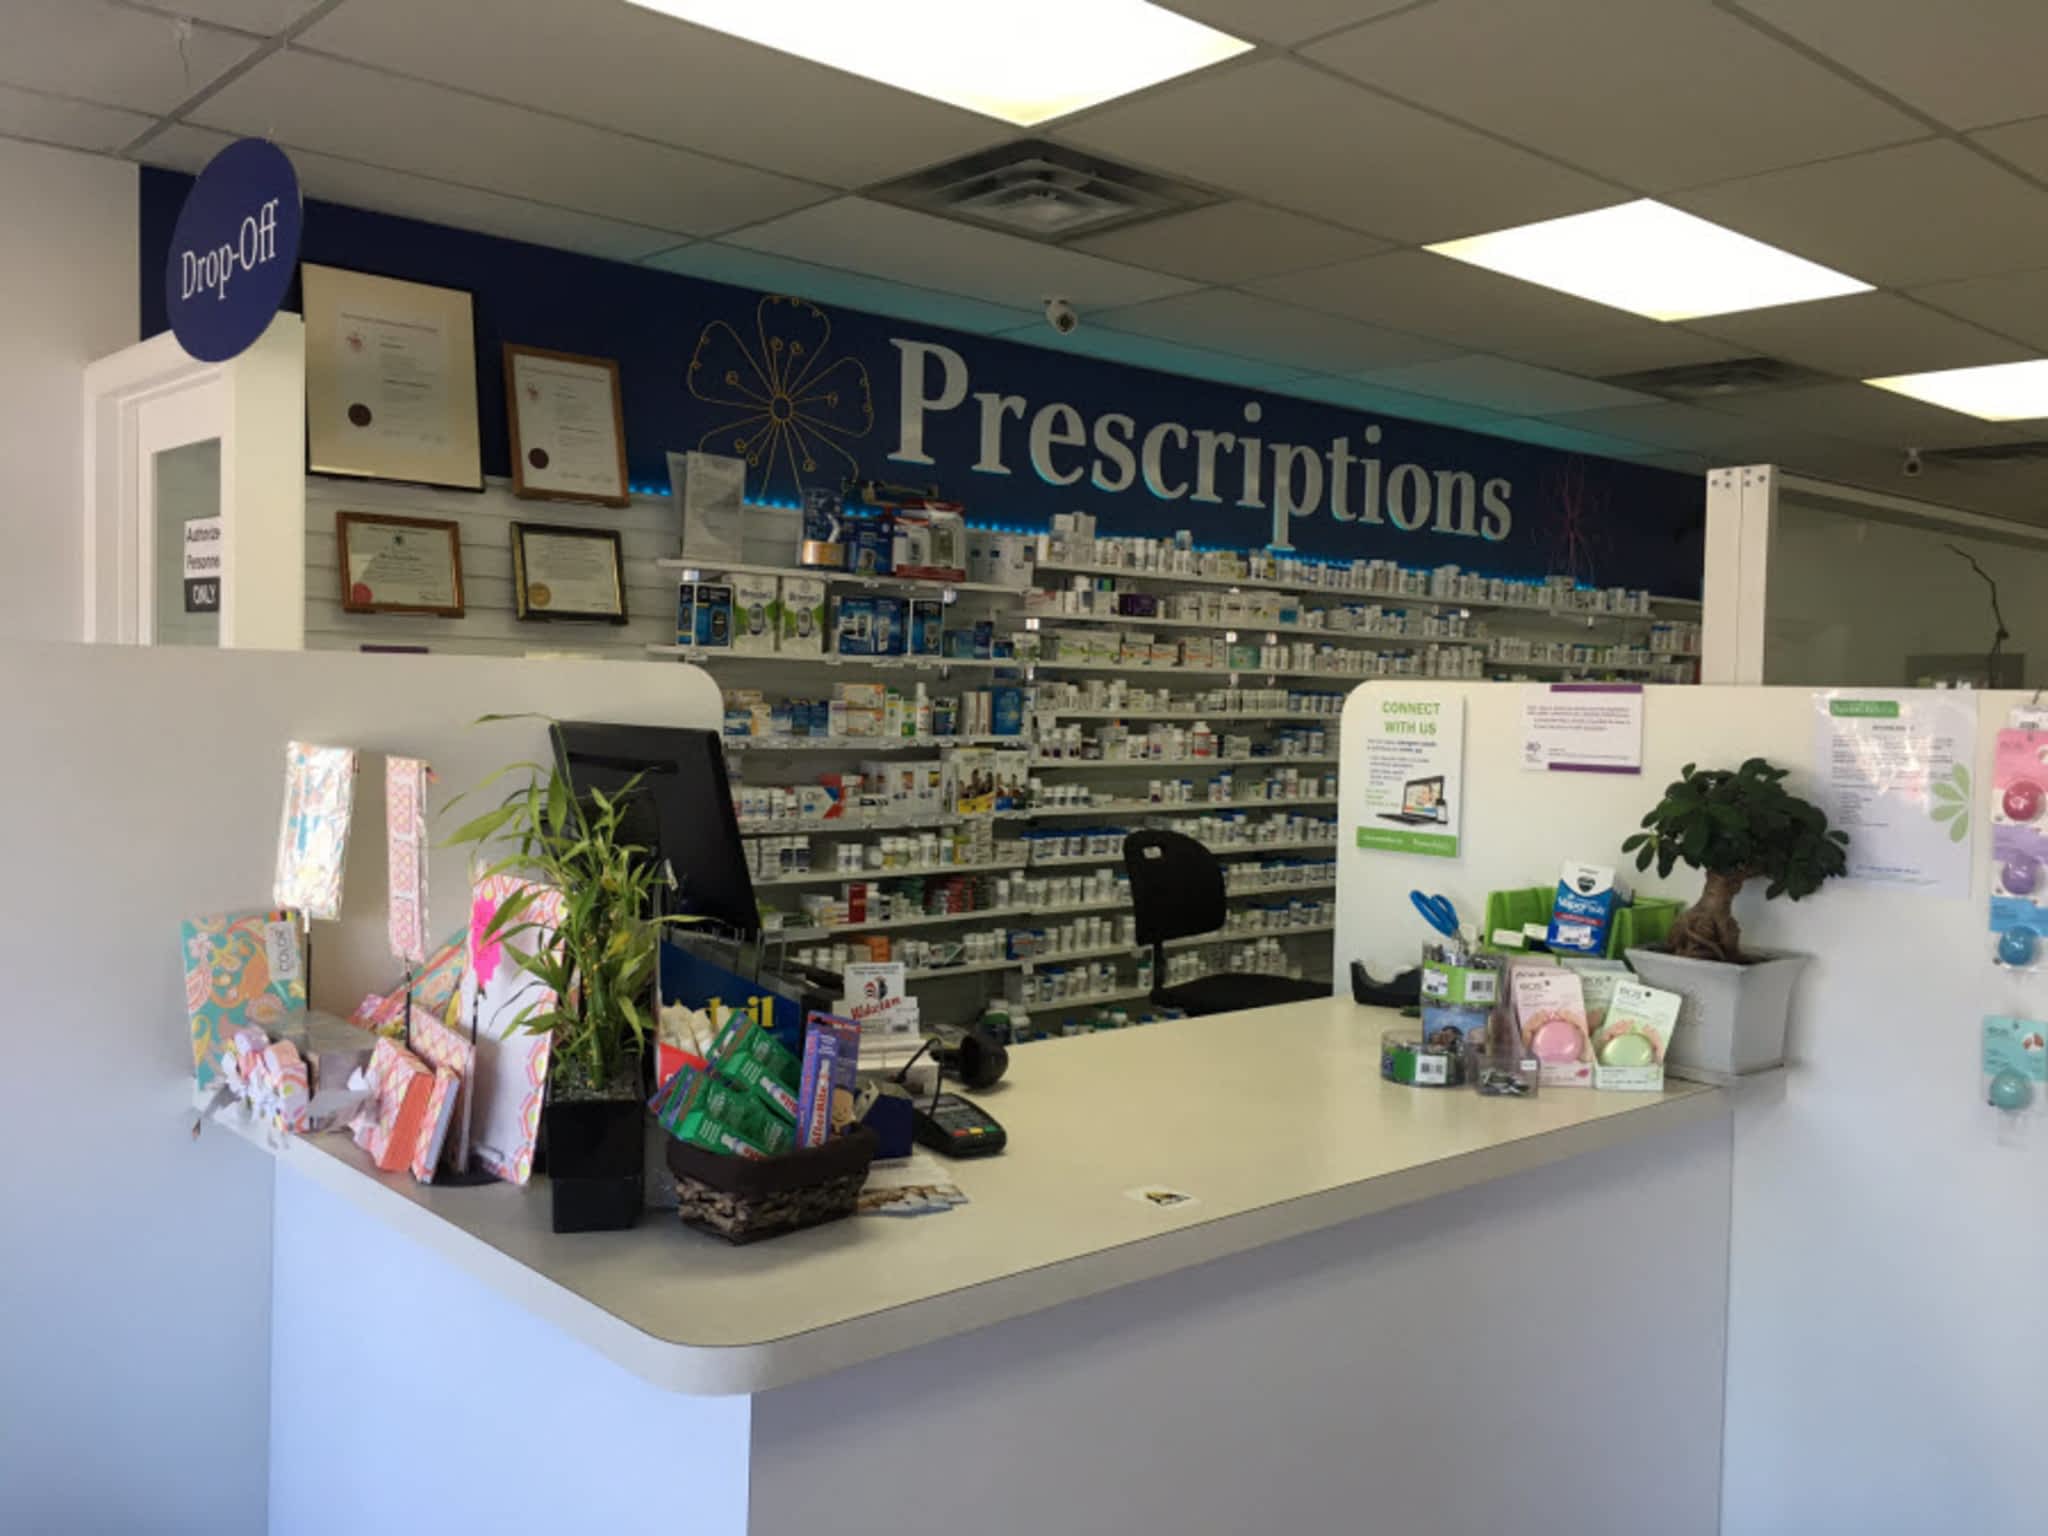 photo Remedy'sRx - CrossPointe Pharmacy